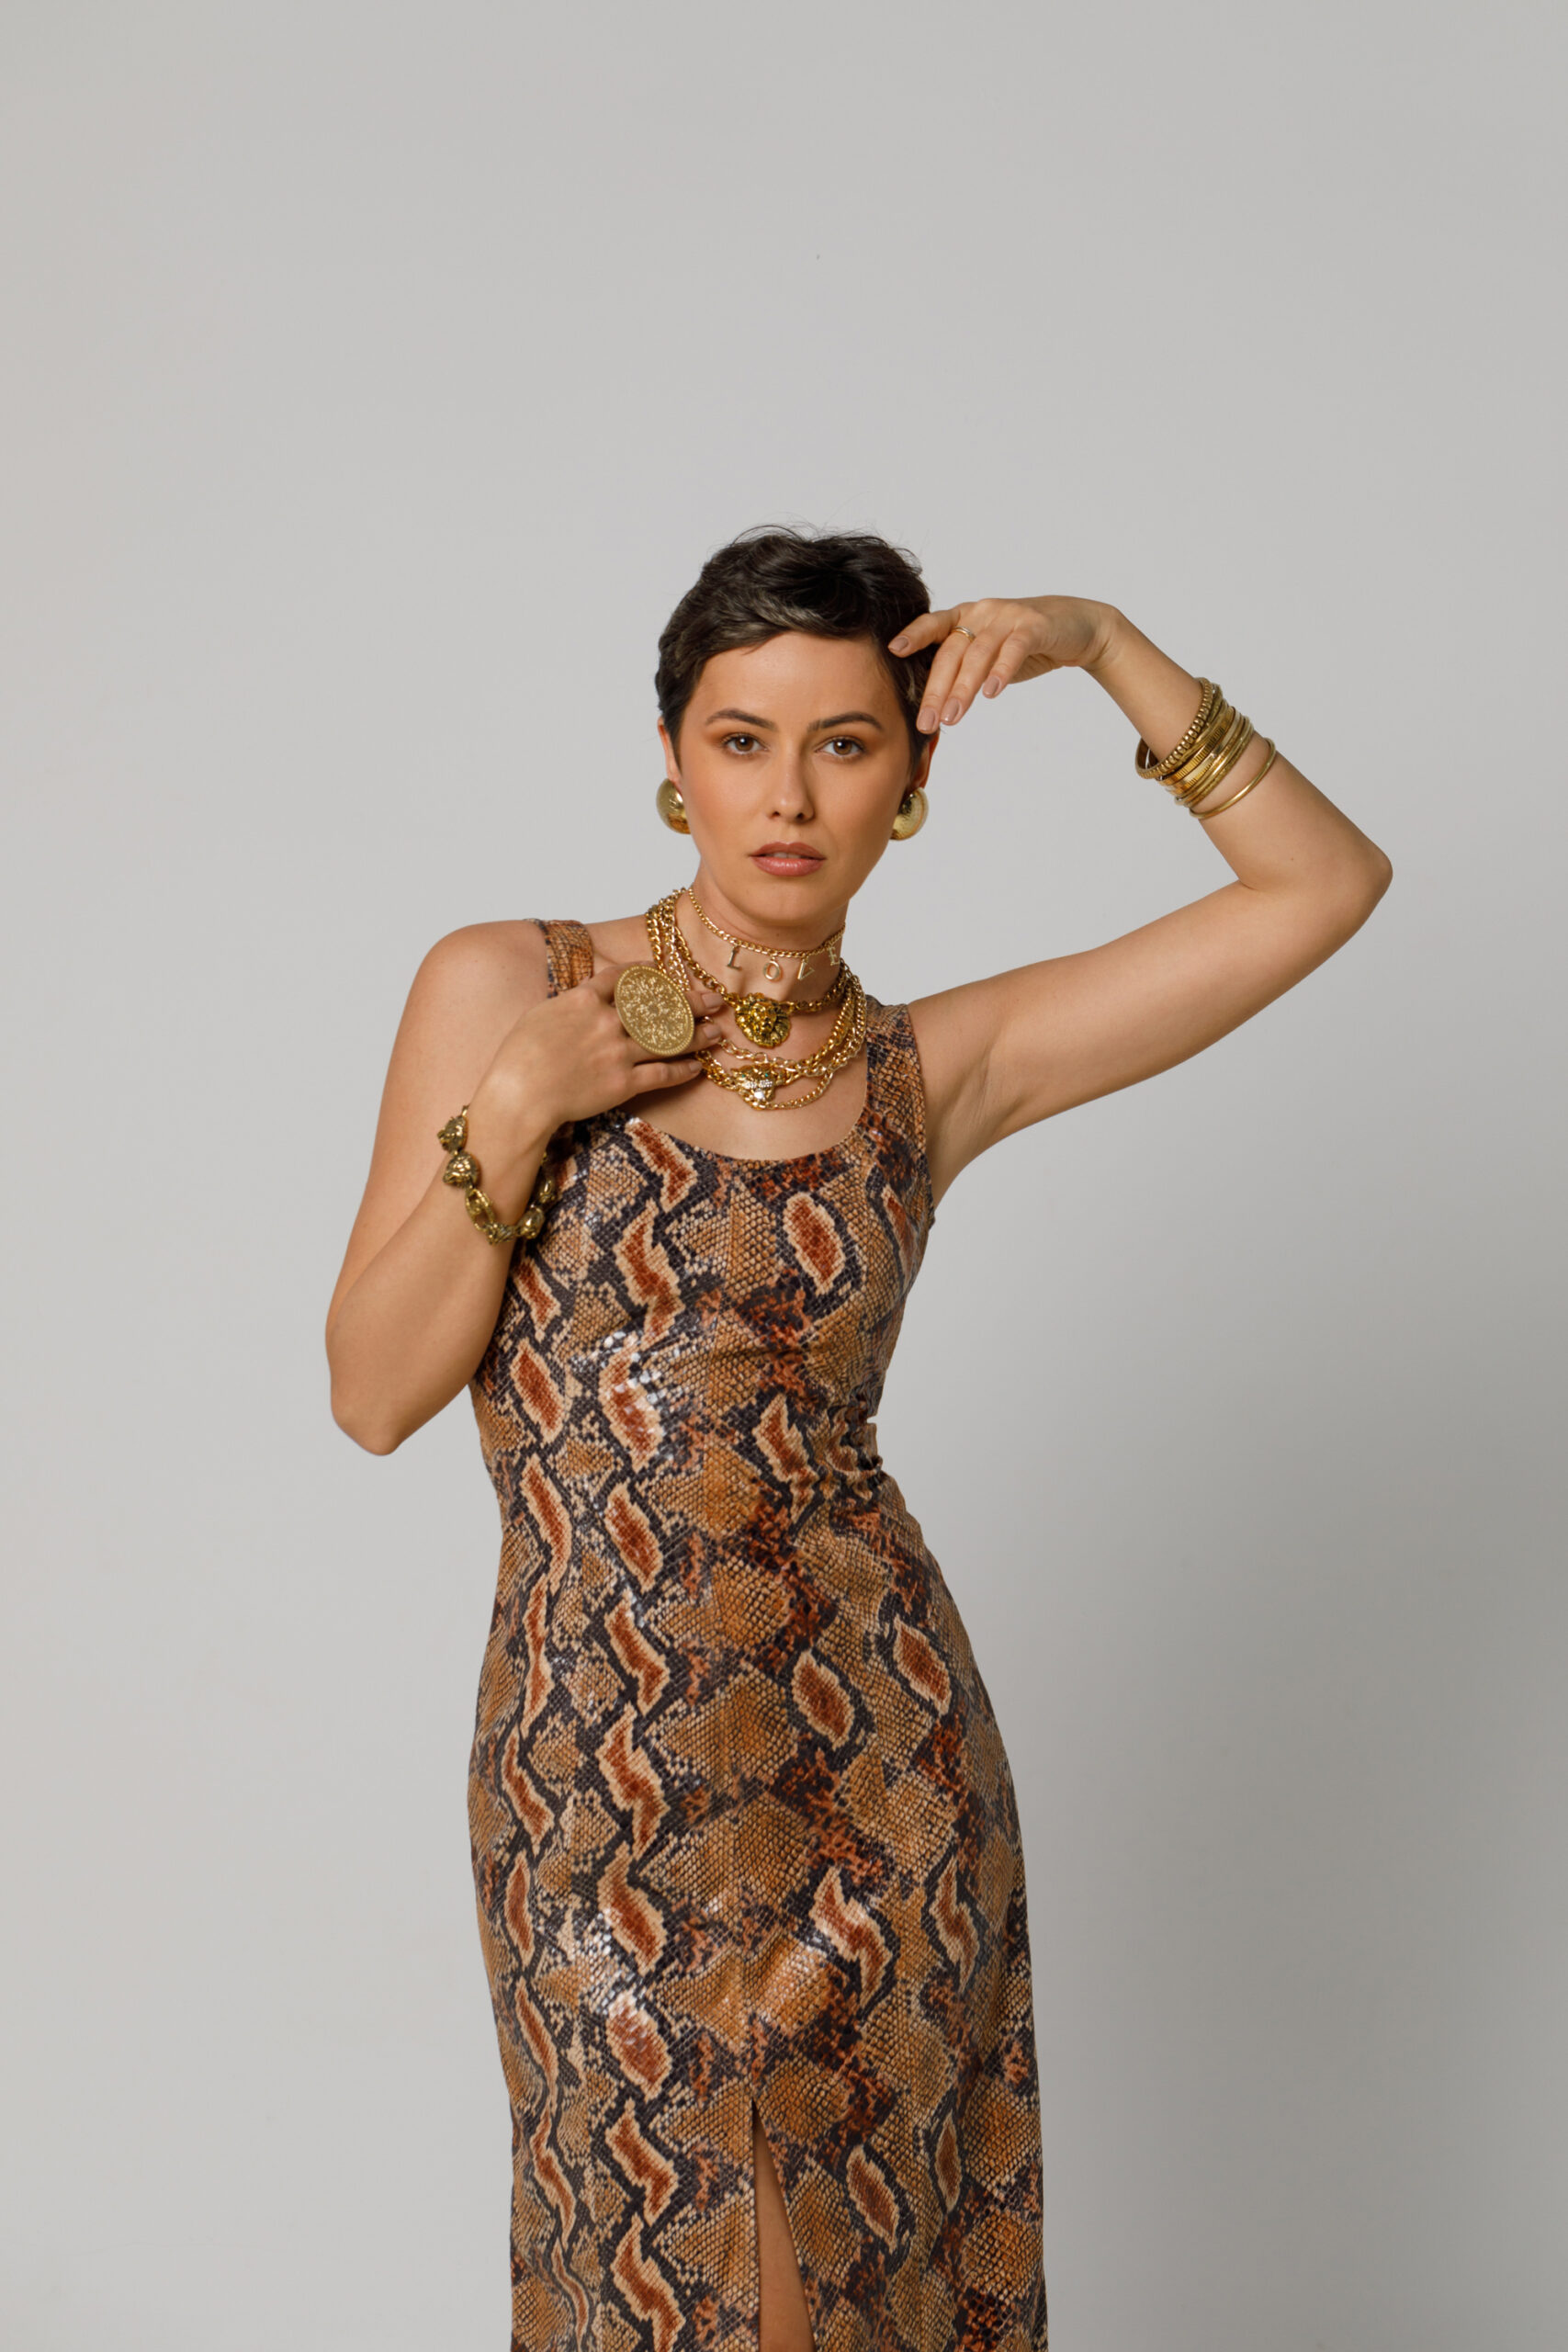 NOELIA Elegant snakeskin dress. Natural fabrics, original design, handmade embroidery